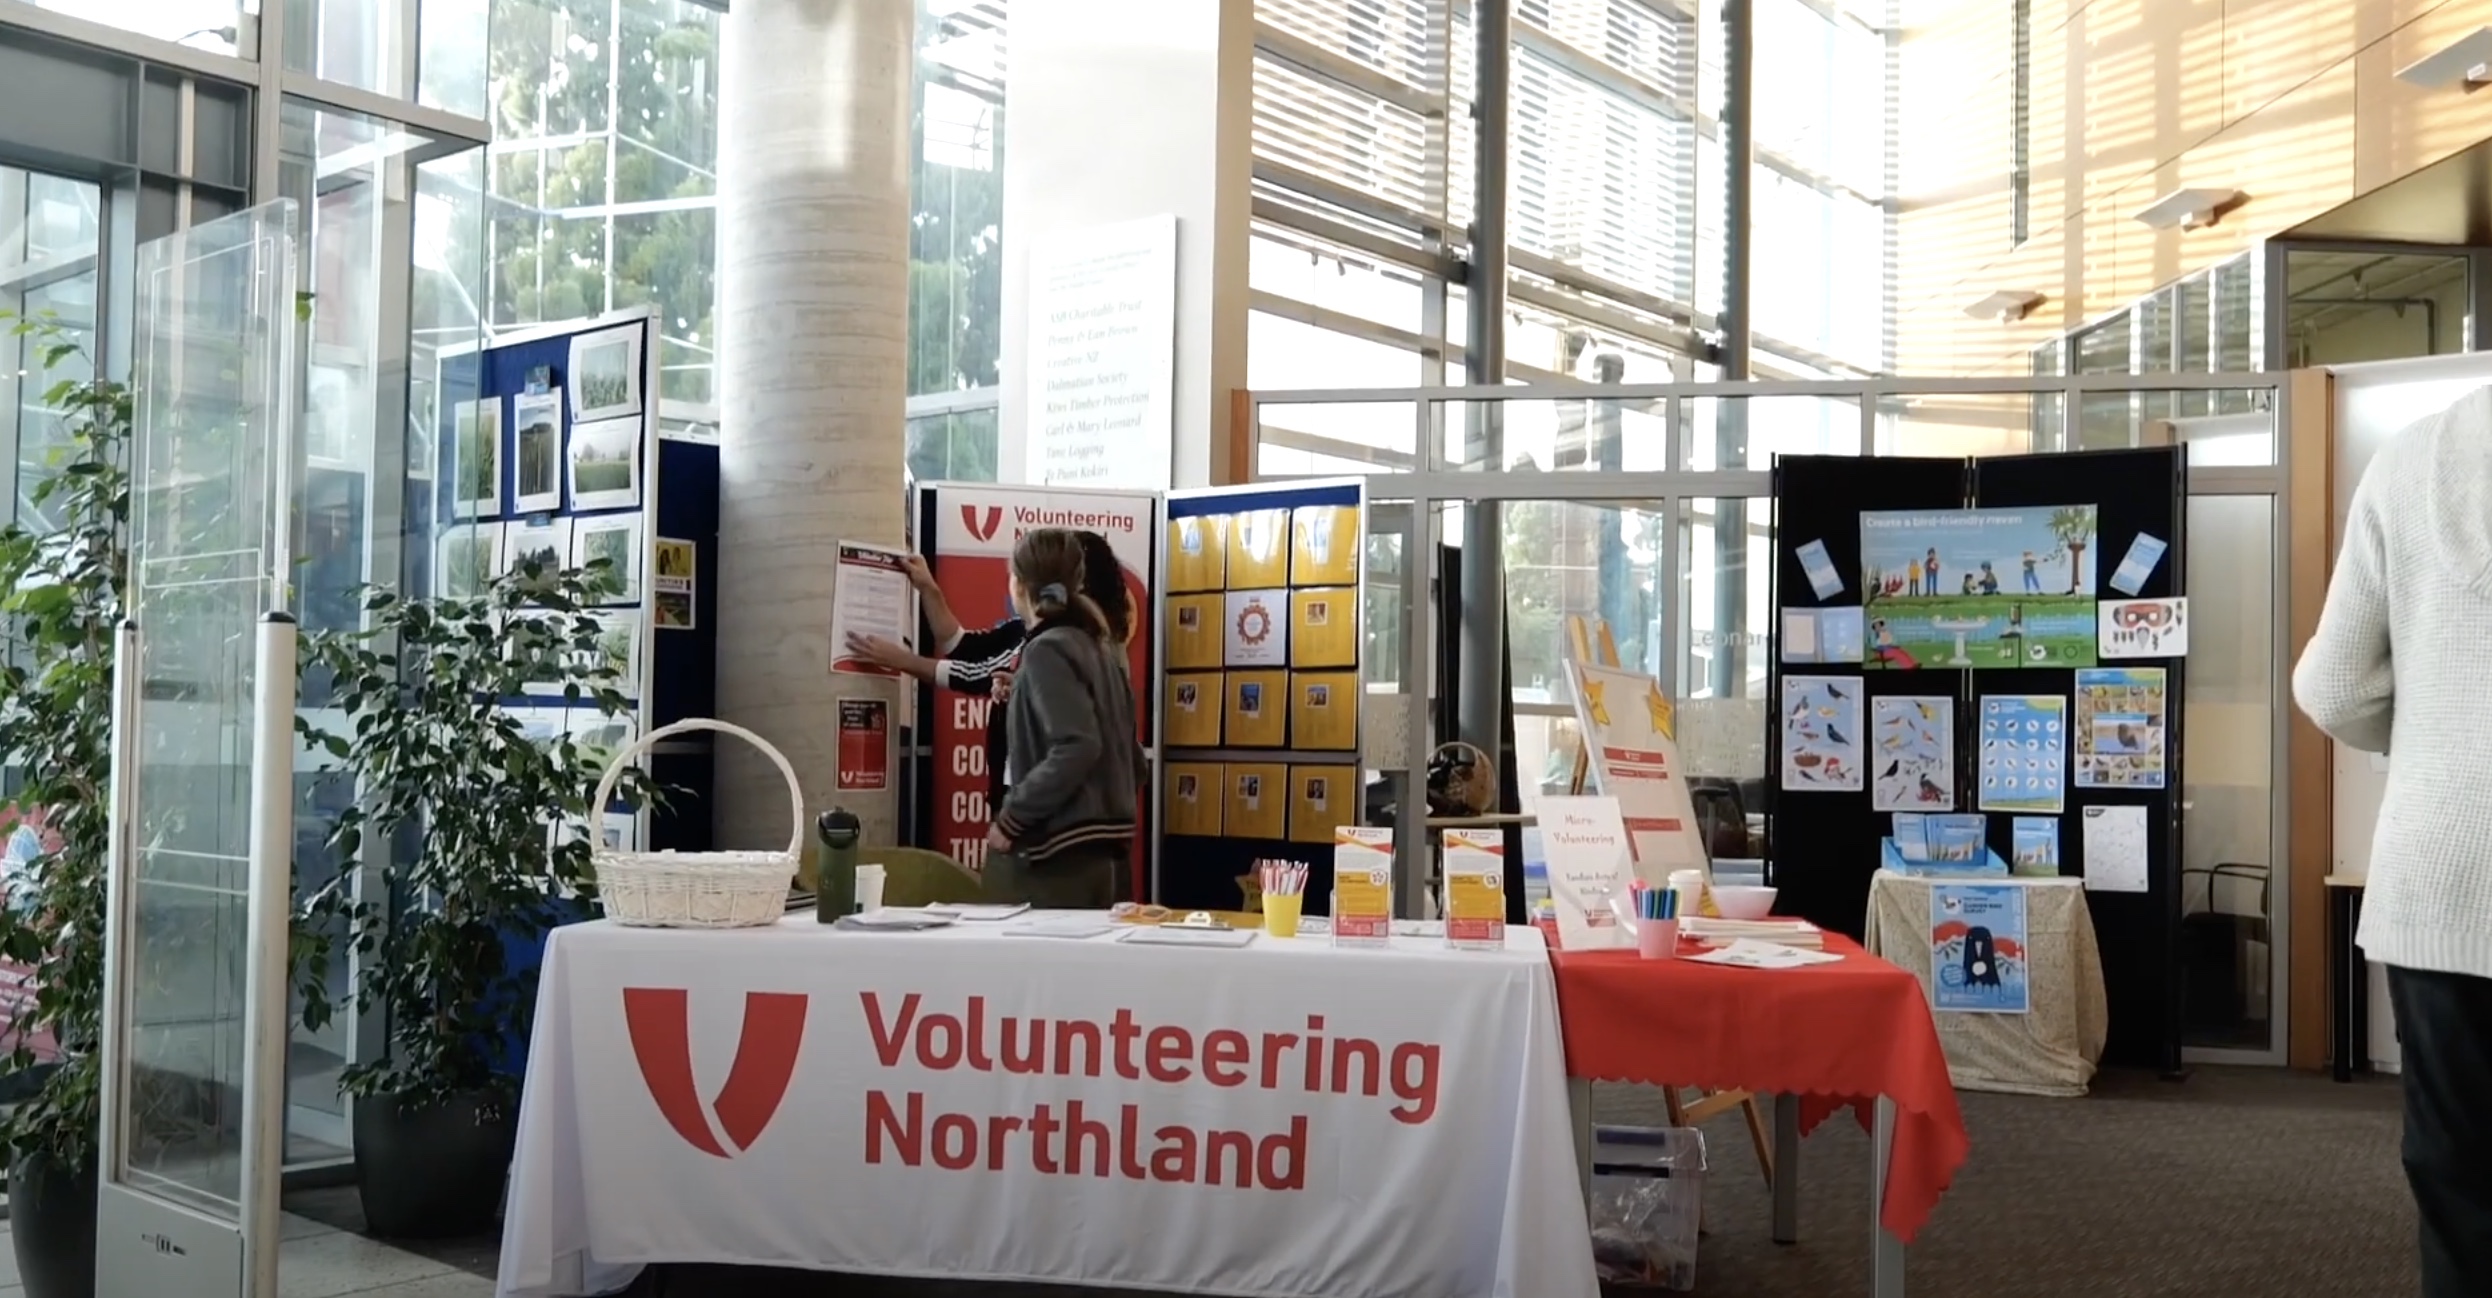 Volunteering Northland